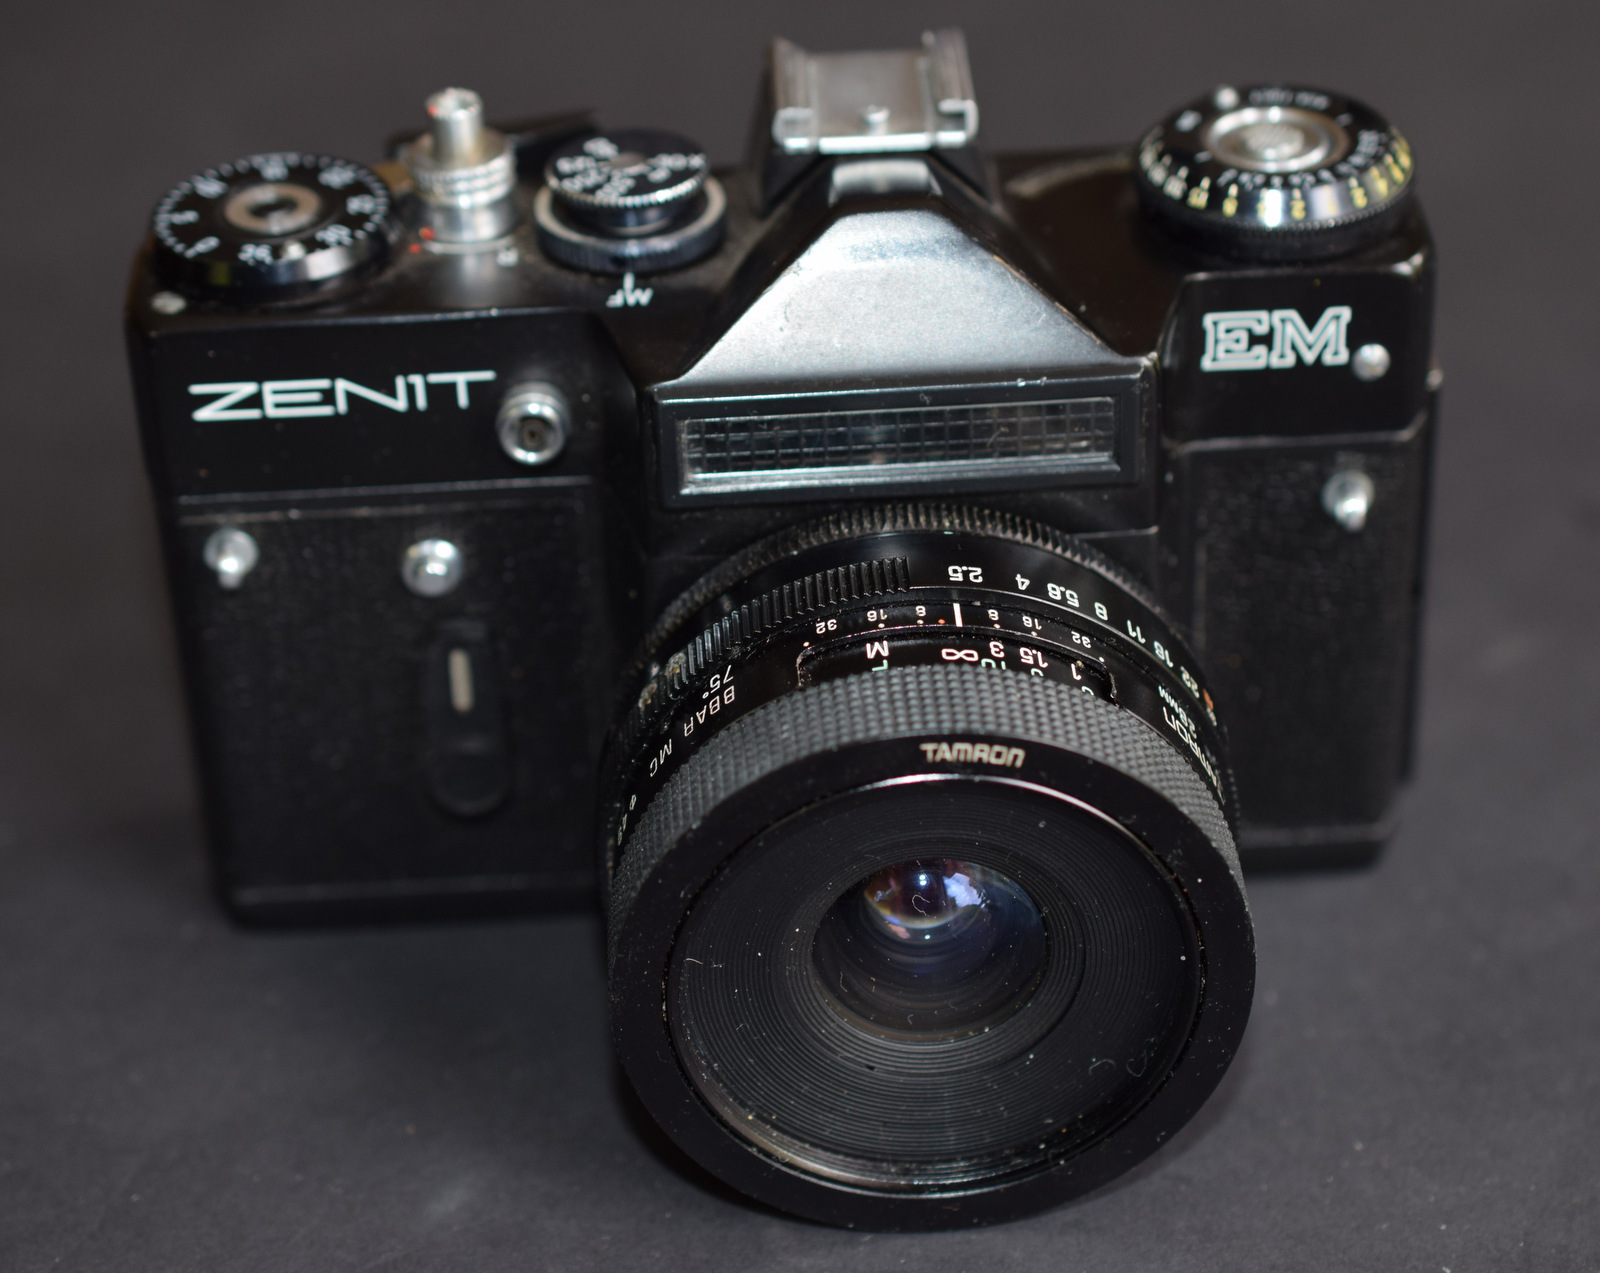 Zenit EM 35mm Camera With Tamron 28mm 1:2.5